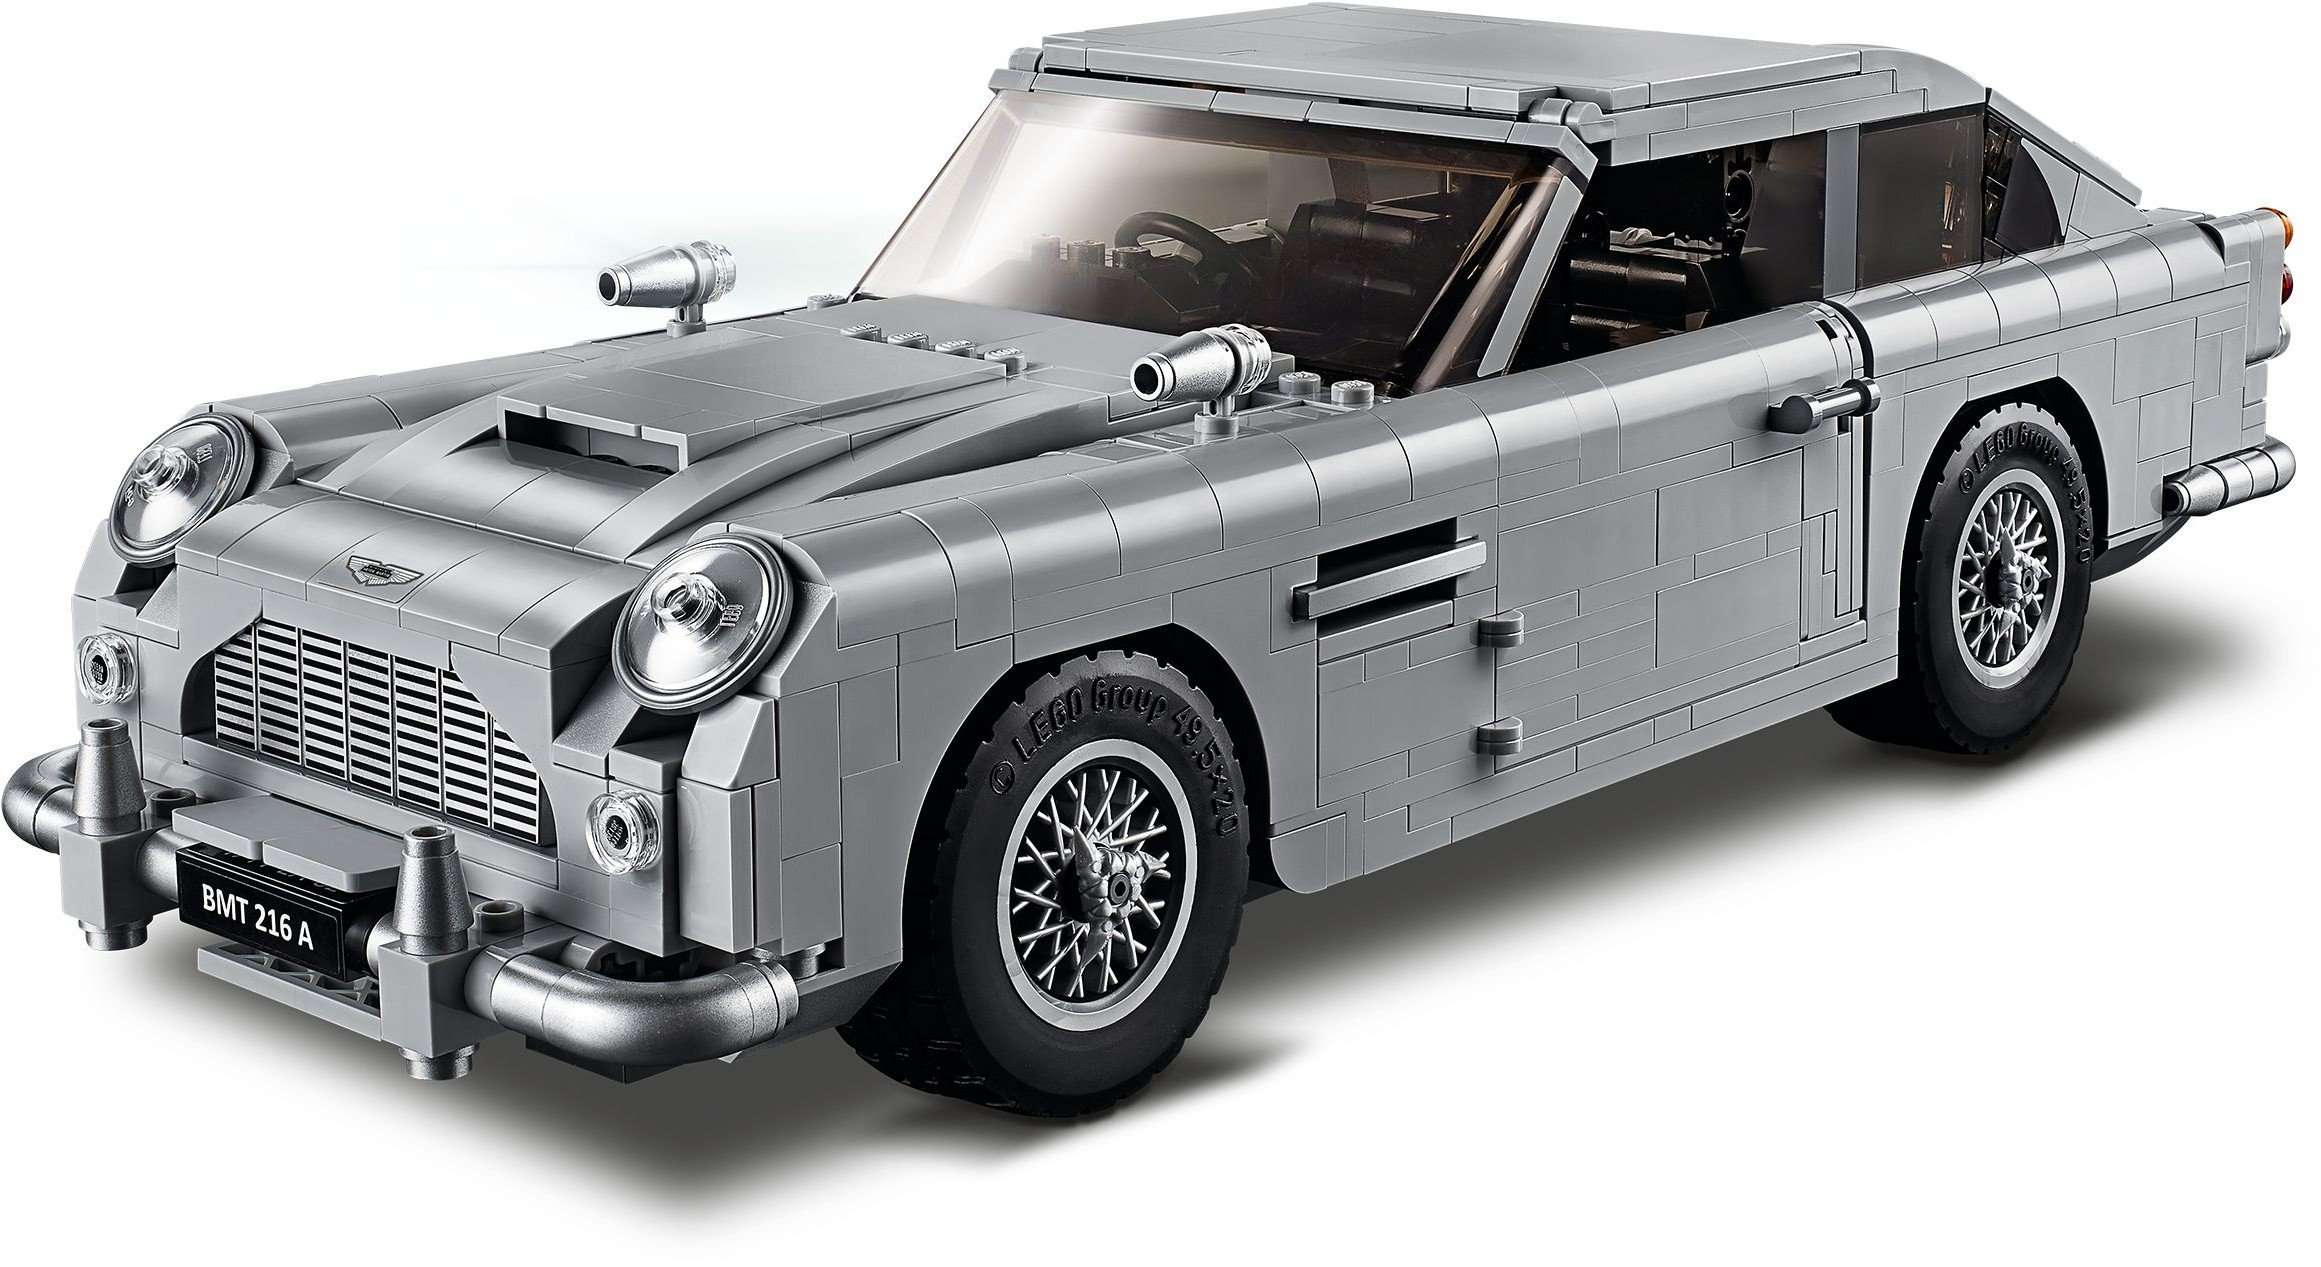 LEGO Creator - James Bond Aston Martin DB5 (10262)